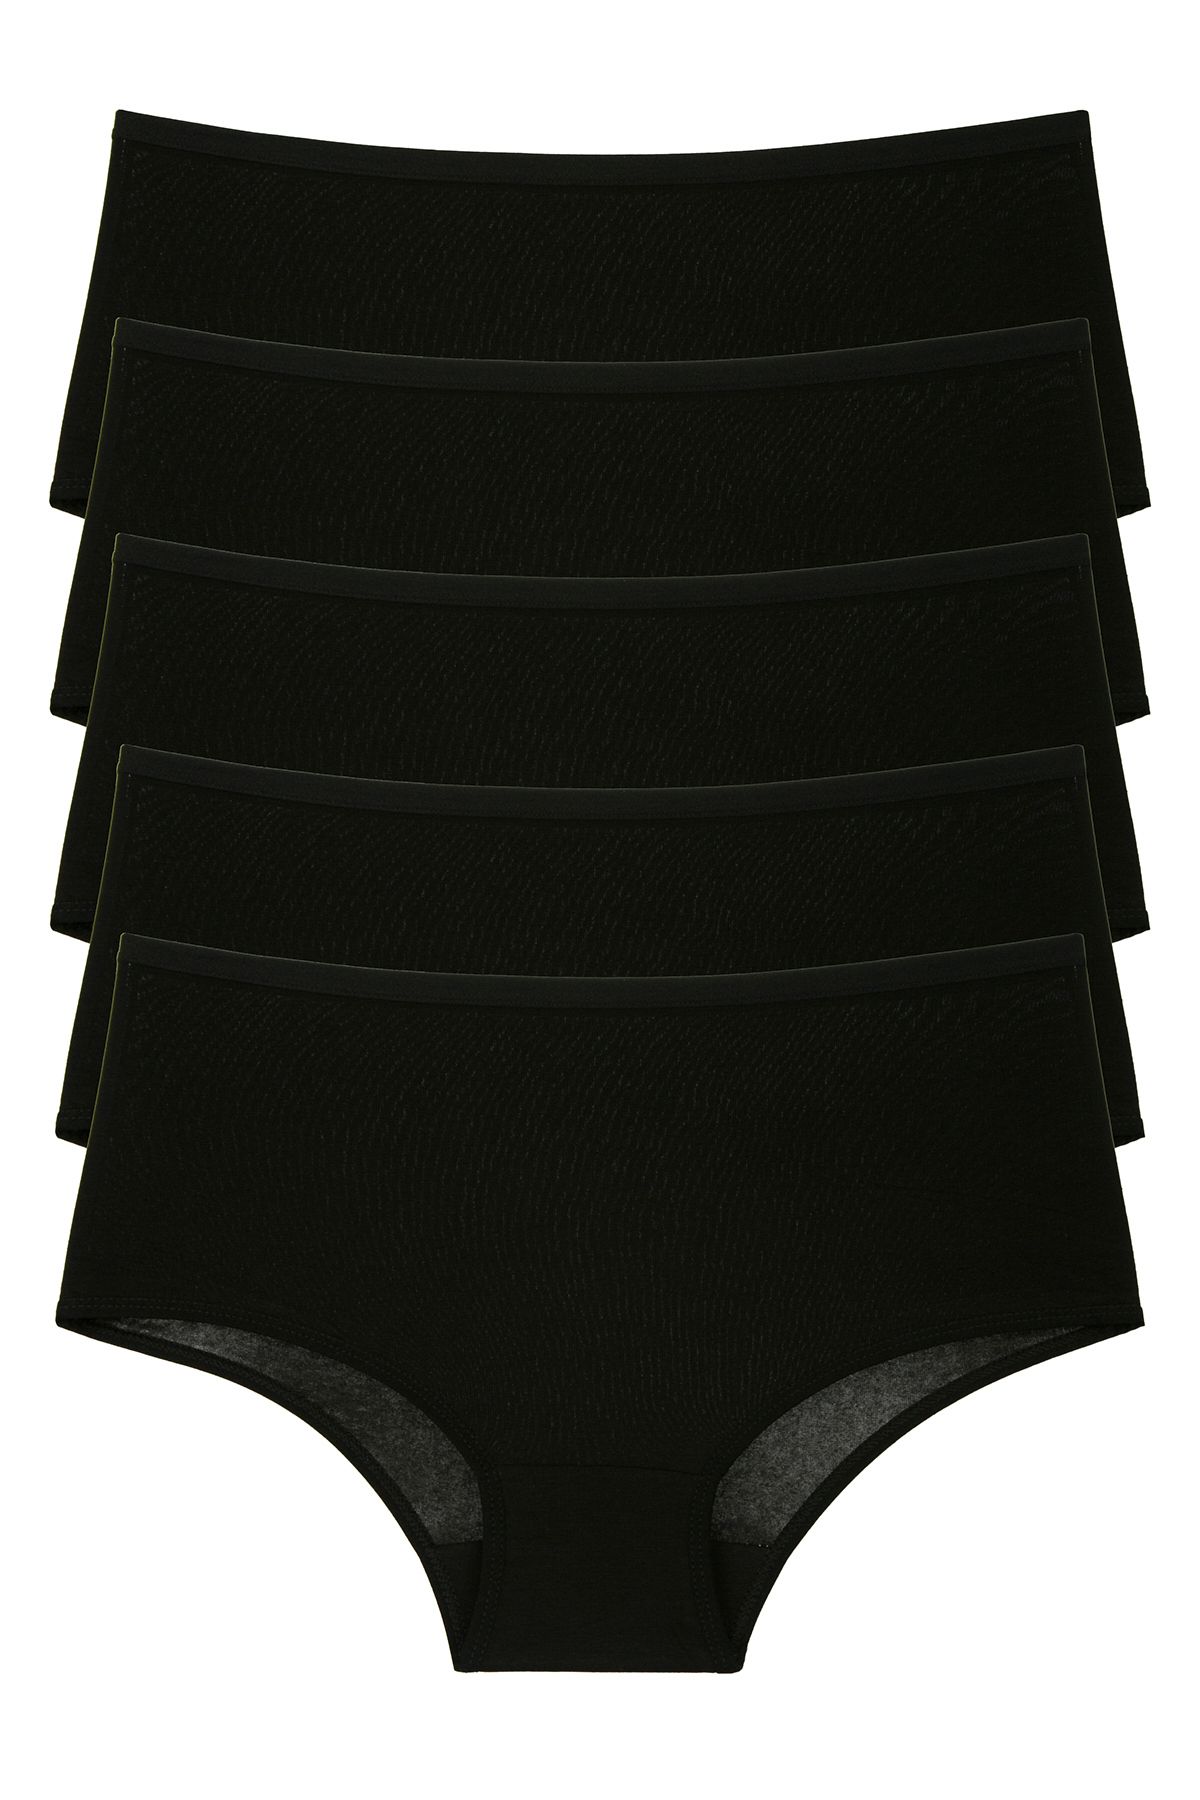 SEBOTEKS 100% Cotton High Waist Ribbed Women's Bato Panties Pack